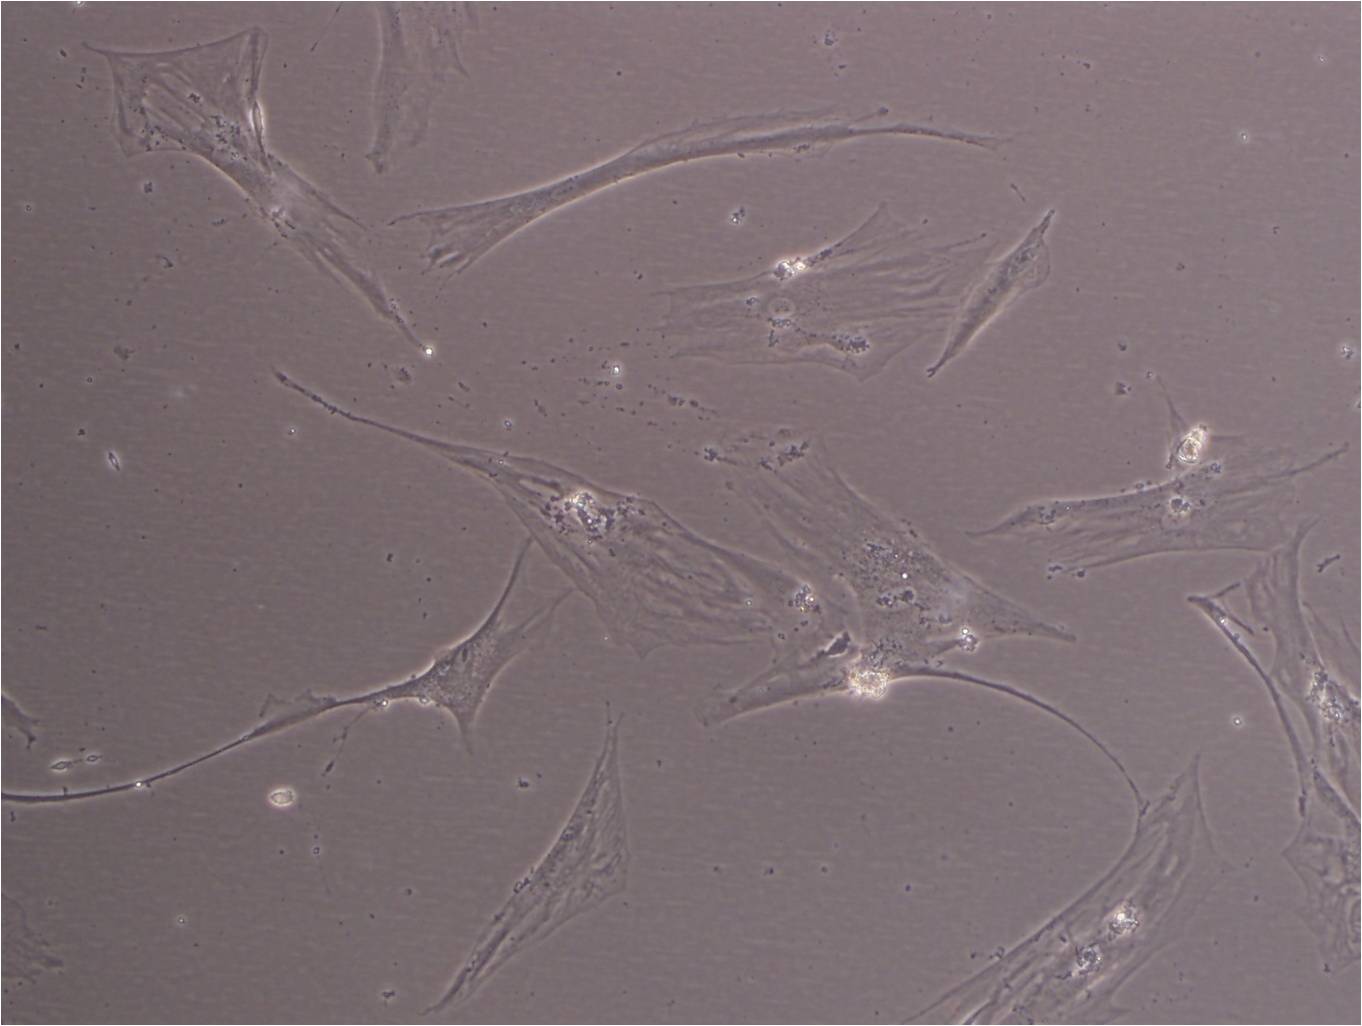 3T6-Swiss albino Cell|小鼠胚胎成纤维细胞,3T6-Swiss albino Cell